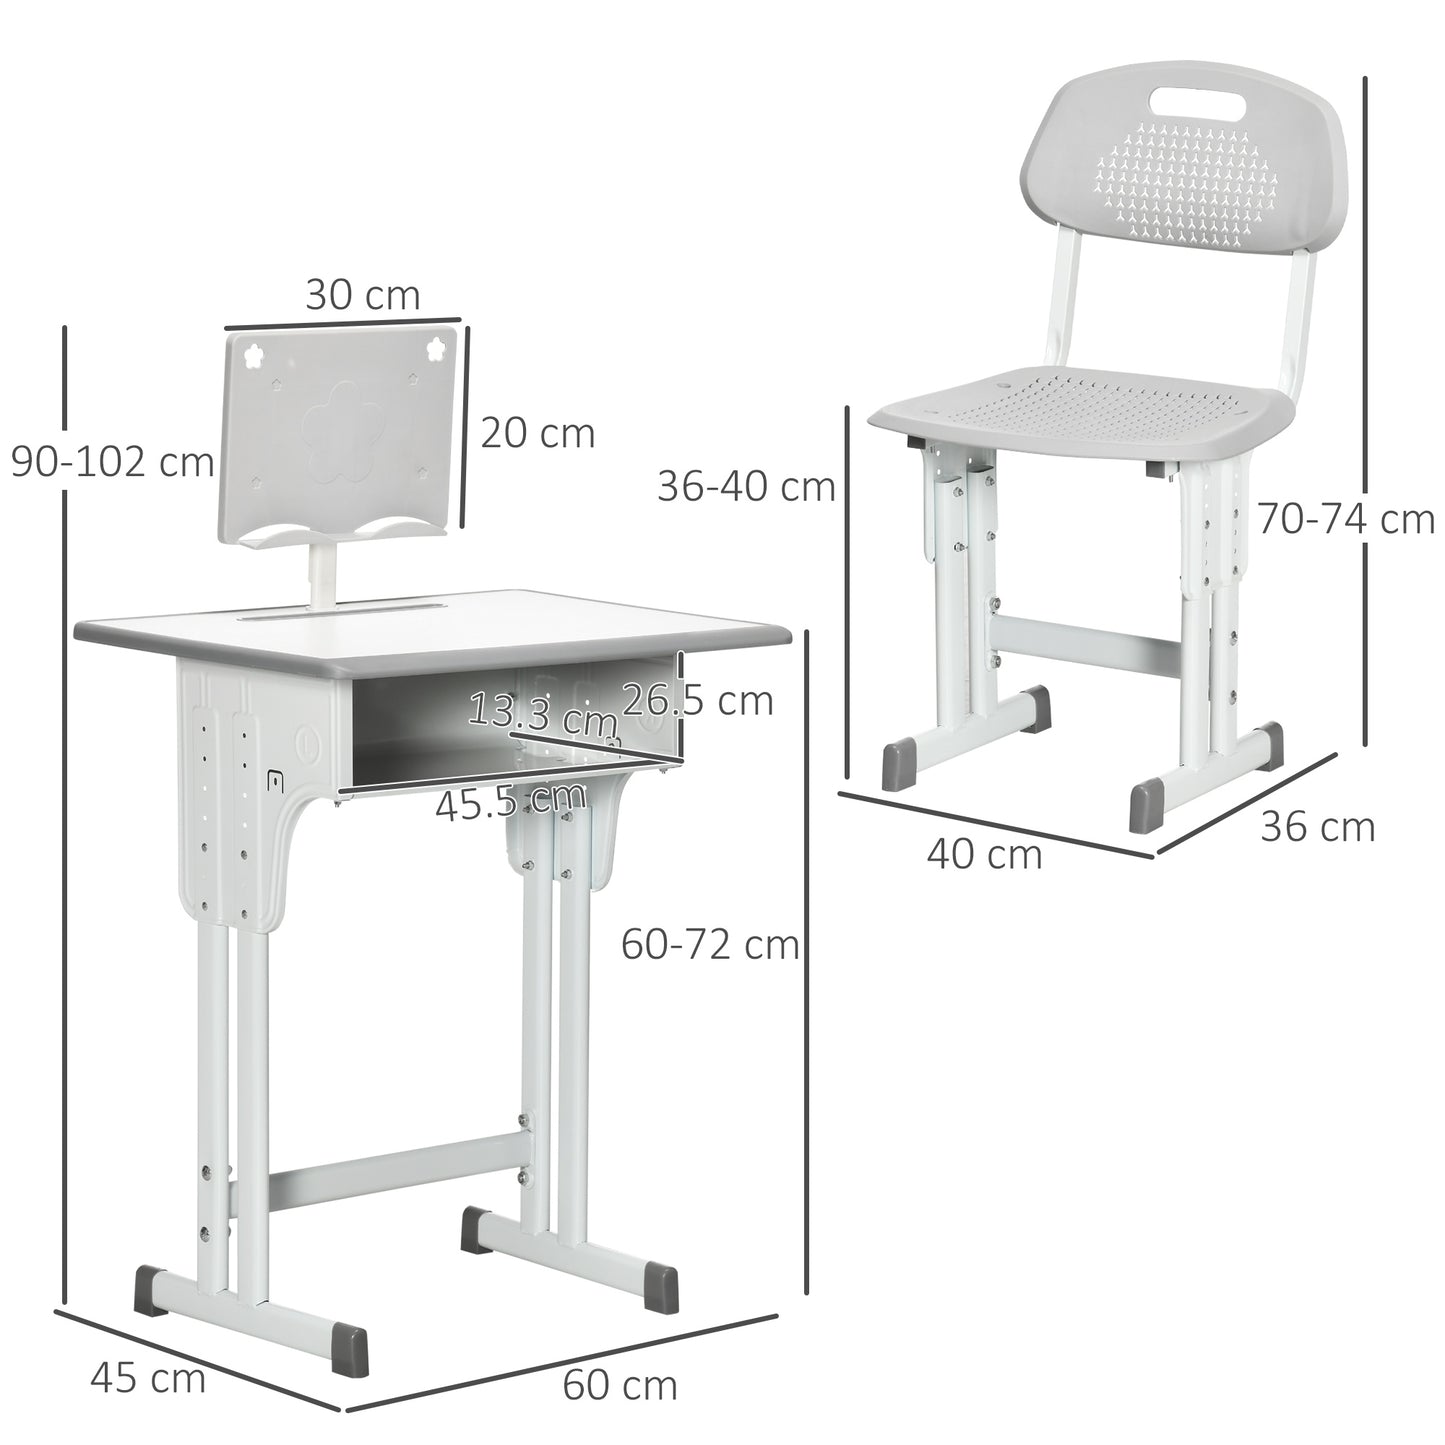 HOMCOM Kids Desk and Chair Set, Height Adjustable Study Table Set, Grey